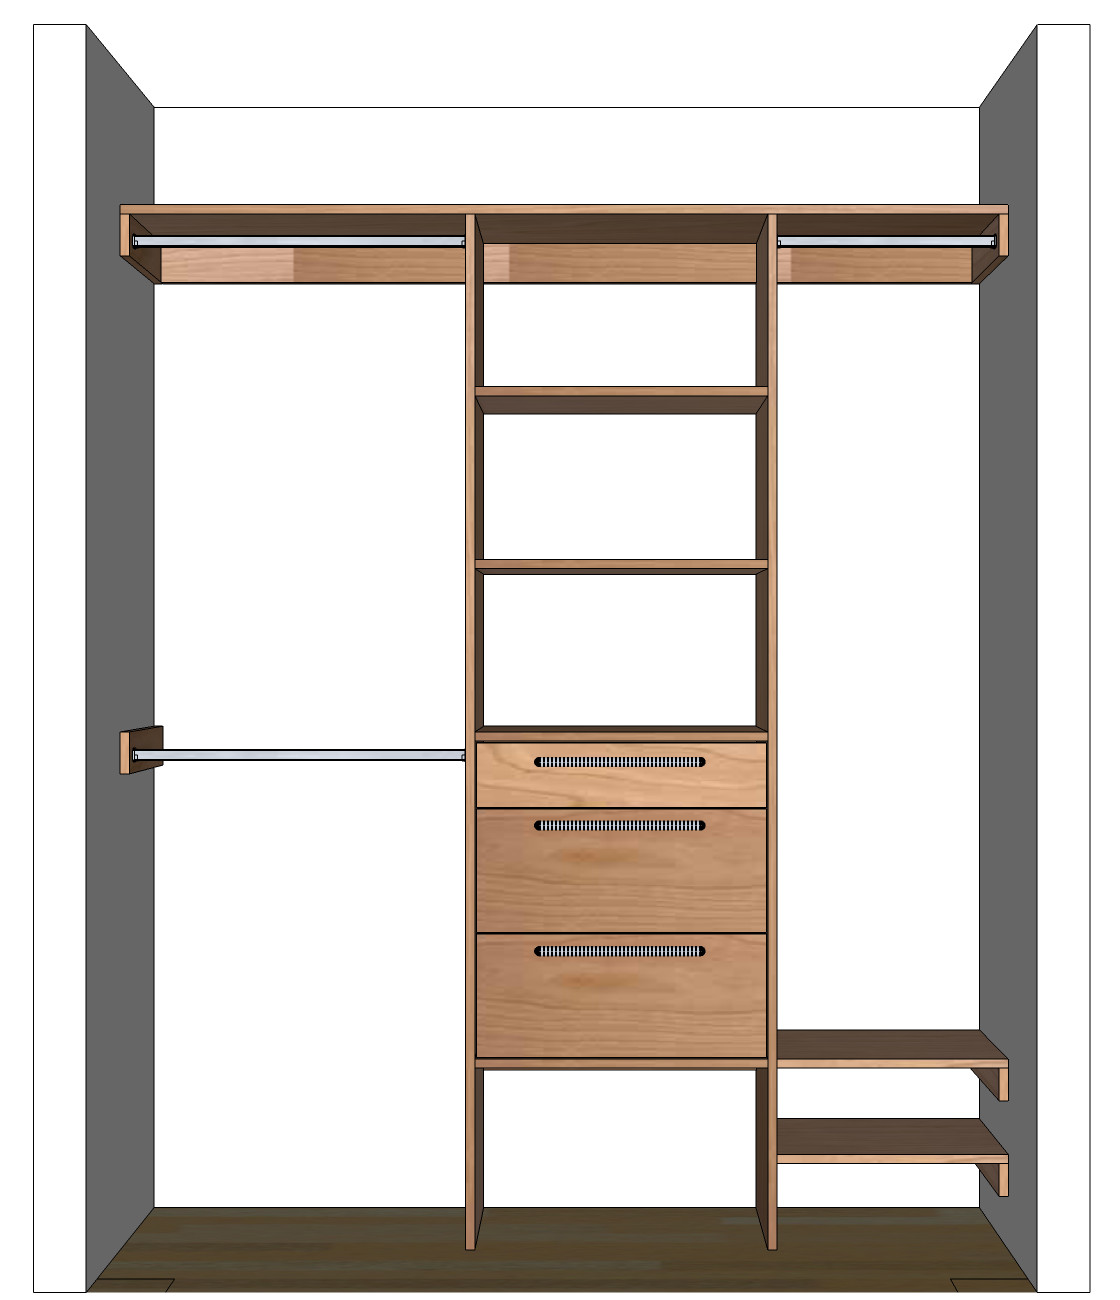 Best ideas about DIY Closet Plans
. Save or Pin DIY Closet Organizer Plans For 5 to 8 Closet Now.